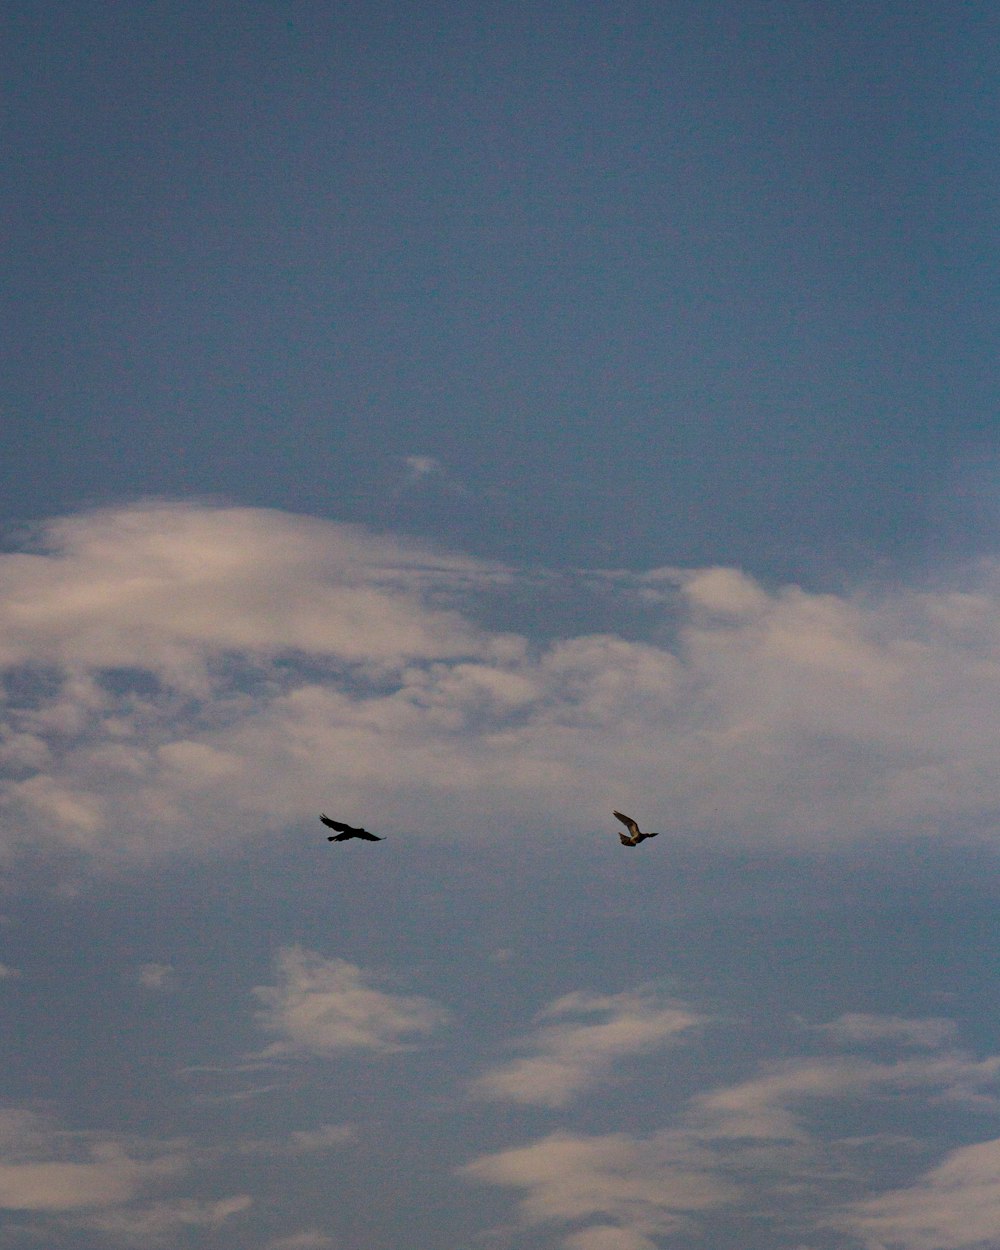 a couple of birds flying through a cloudy blue sky